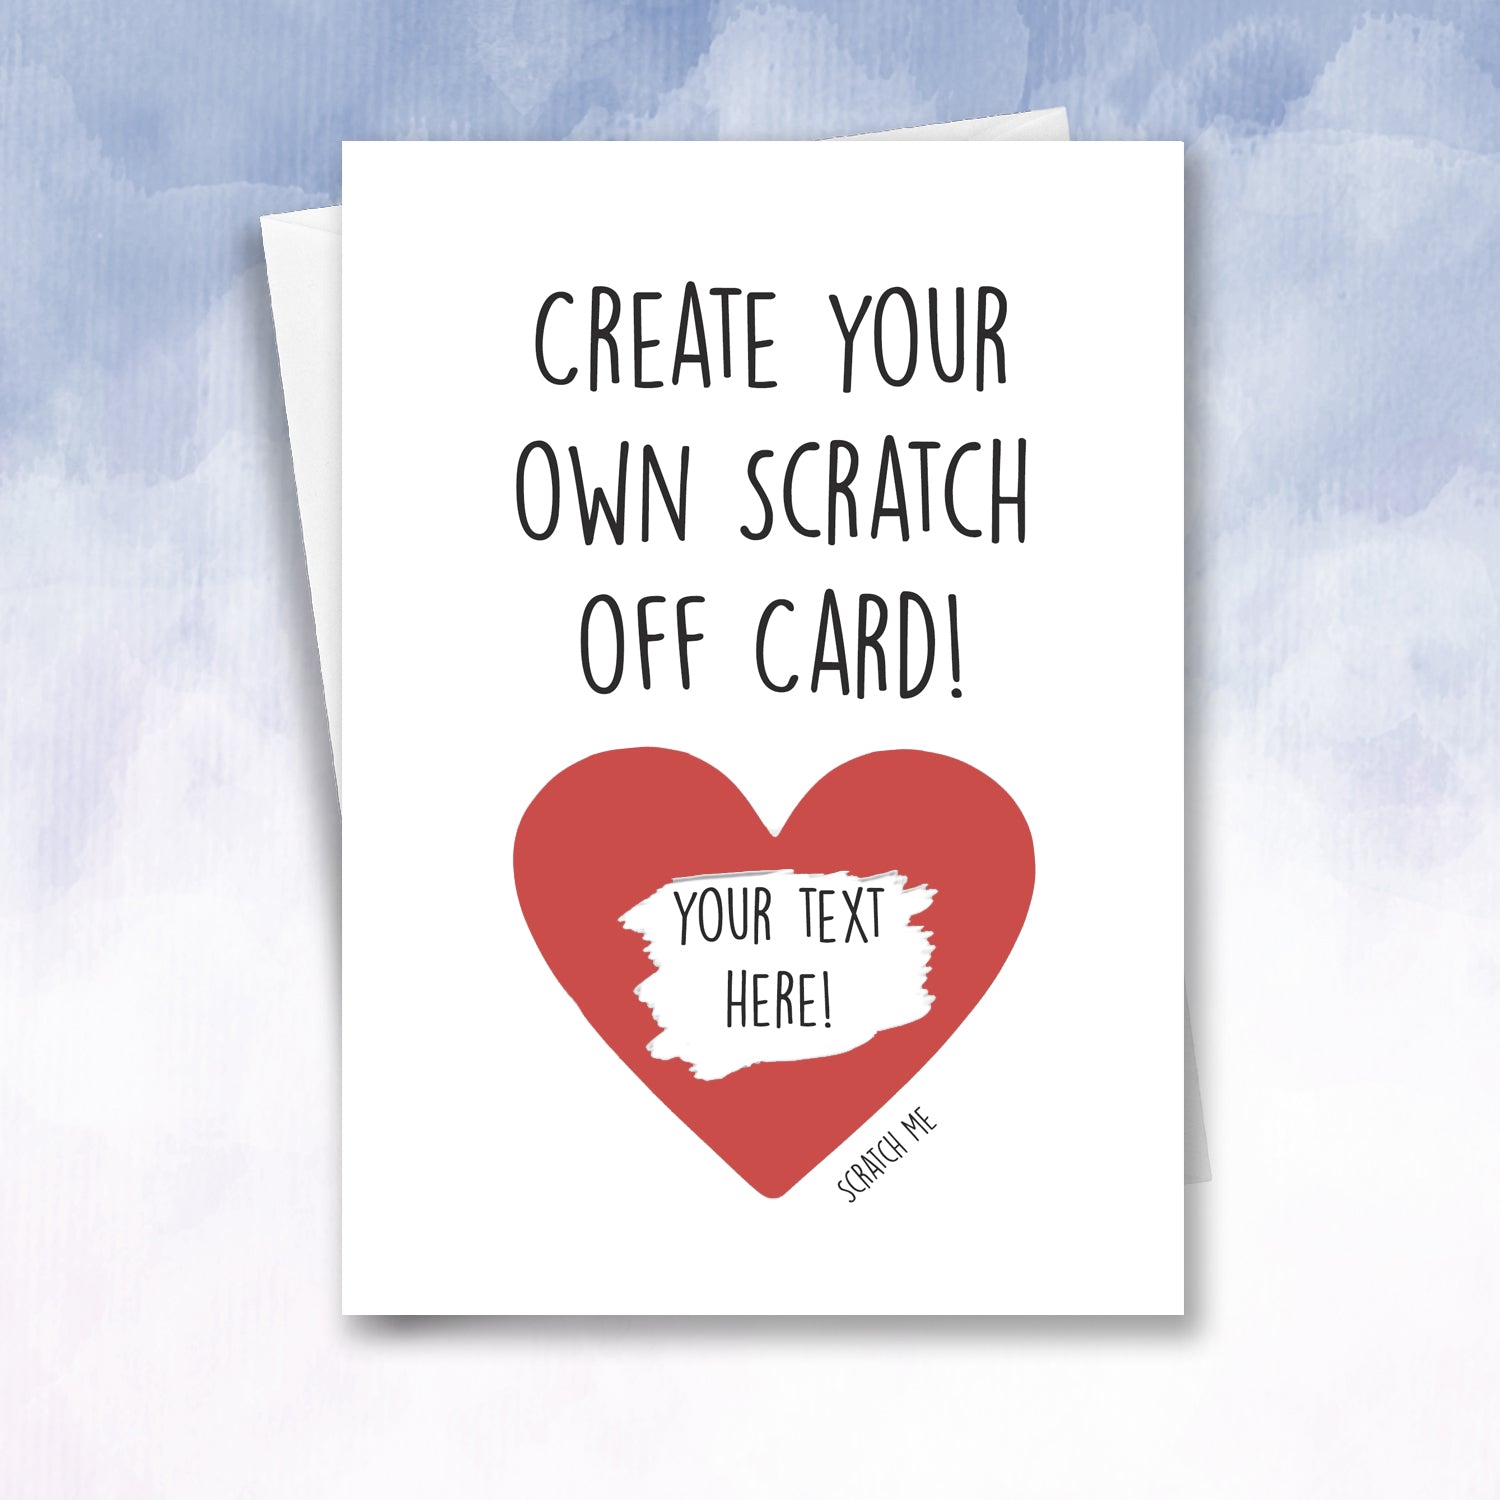 Create Your Own Scratch Off Card - 2f75e5-2